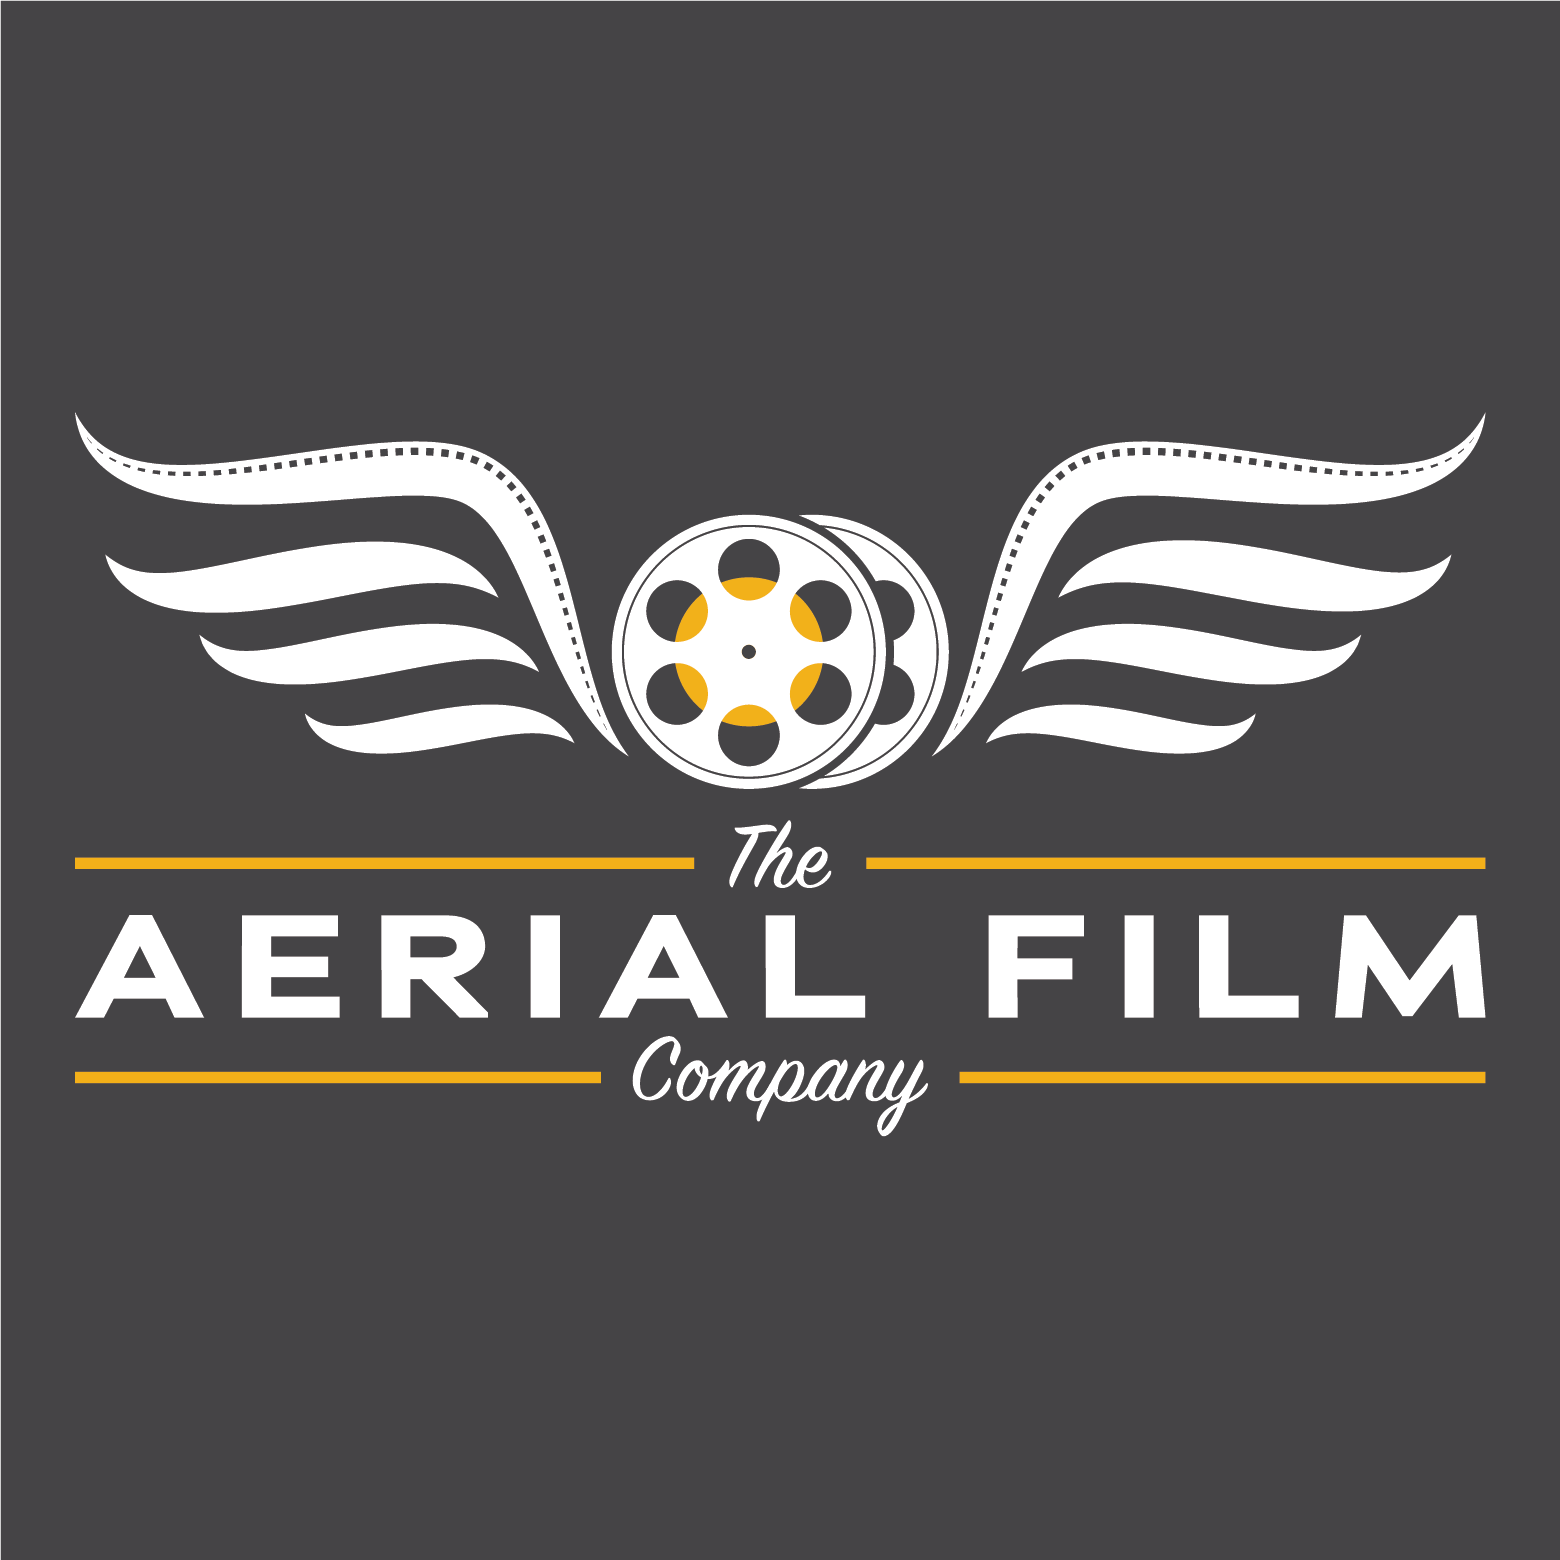 The Aerial Film Company